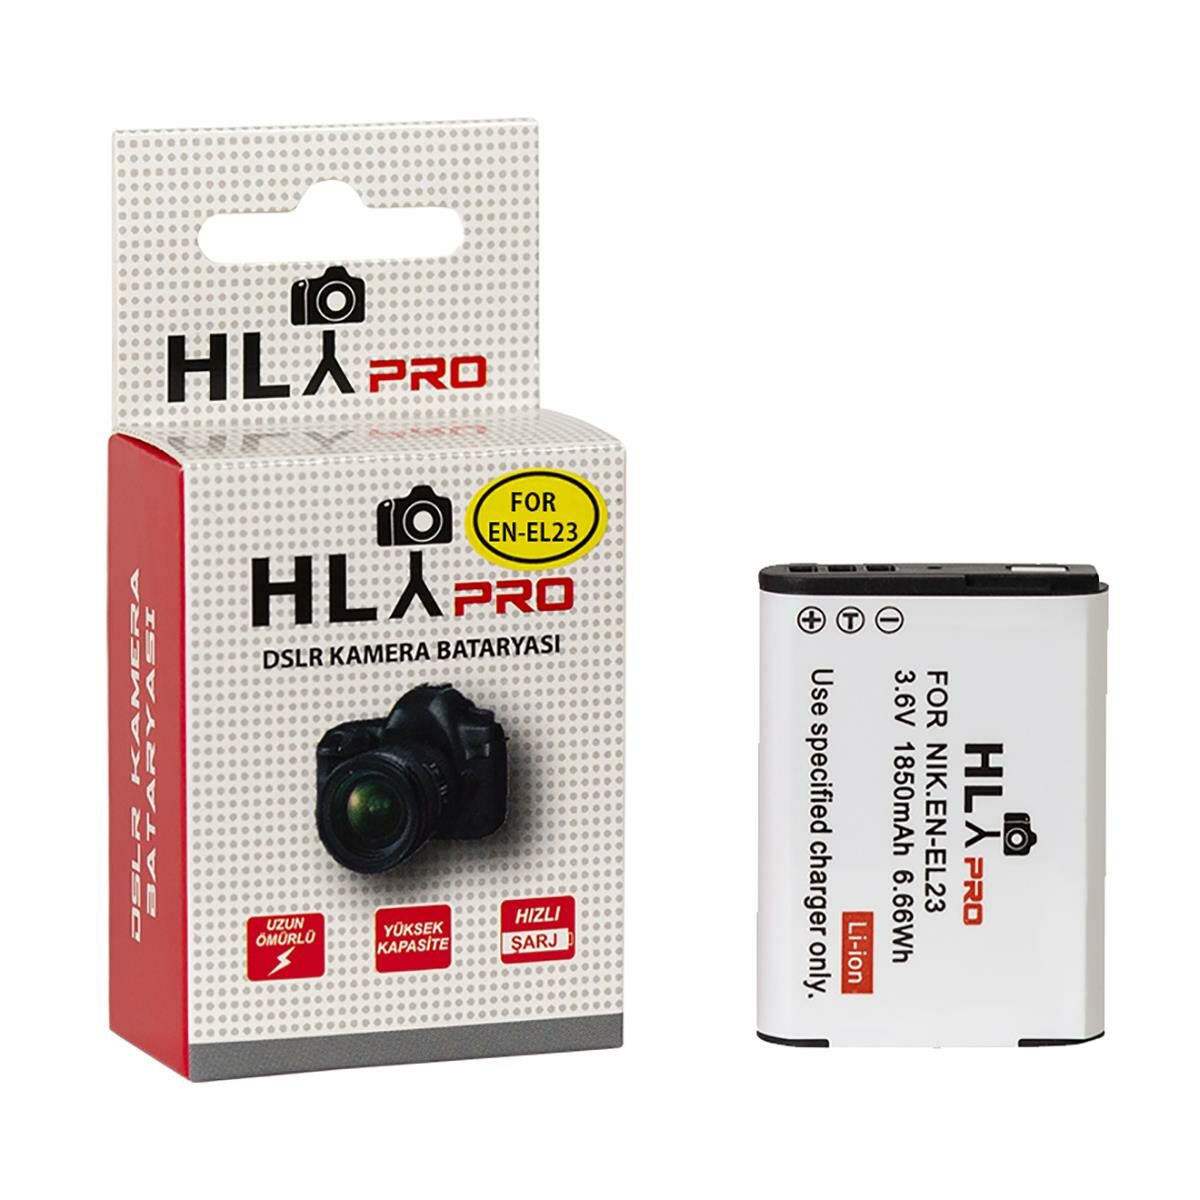 Hlypro Nikon P610 için EN-EL23 Batarya